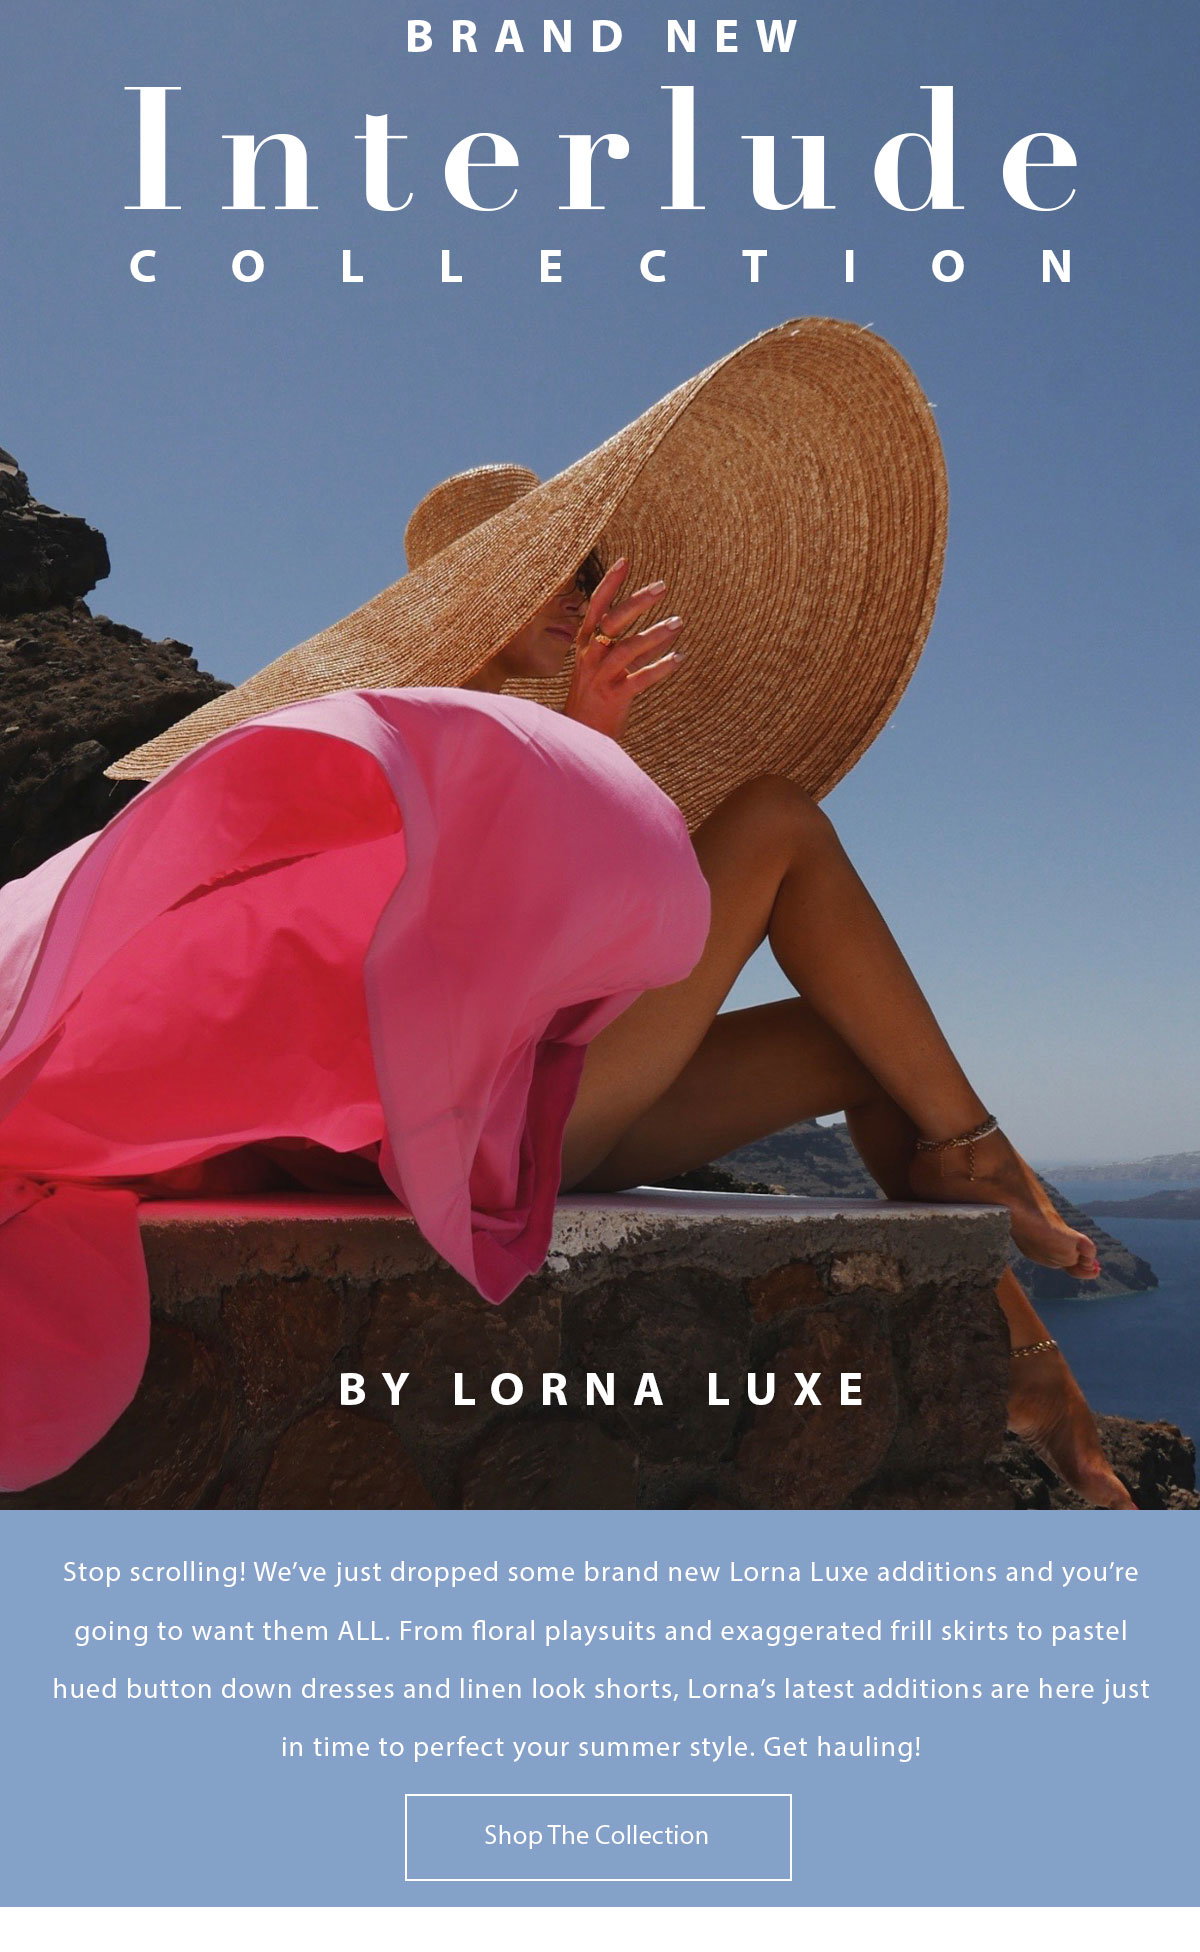 The Lorna Luxe Summer Range Edit